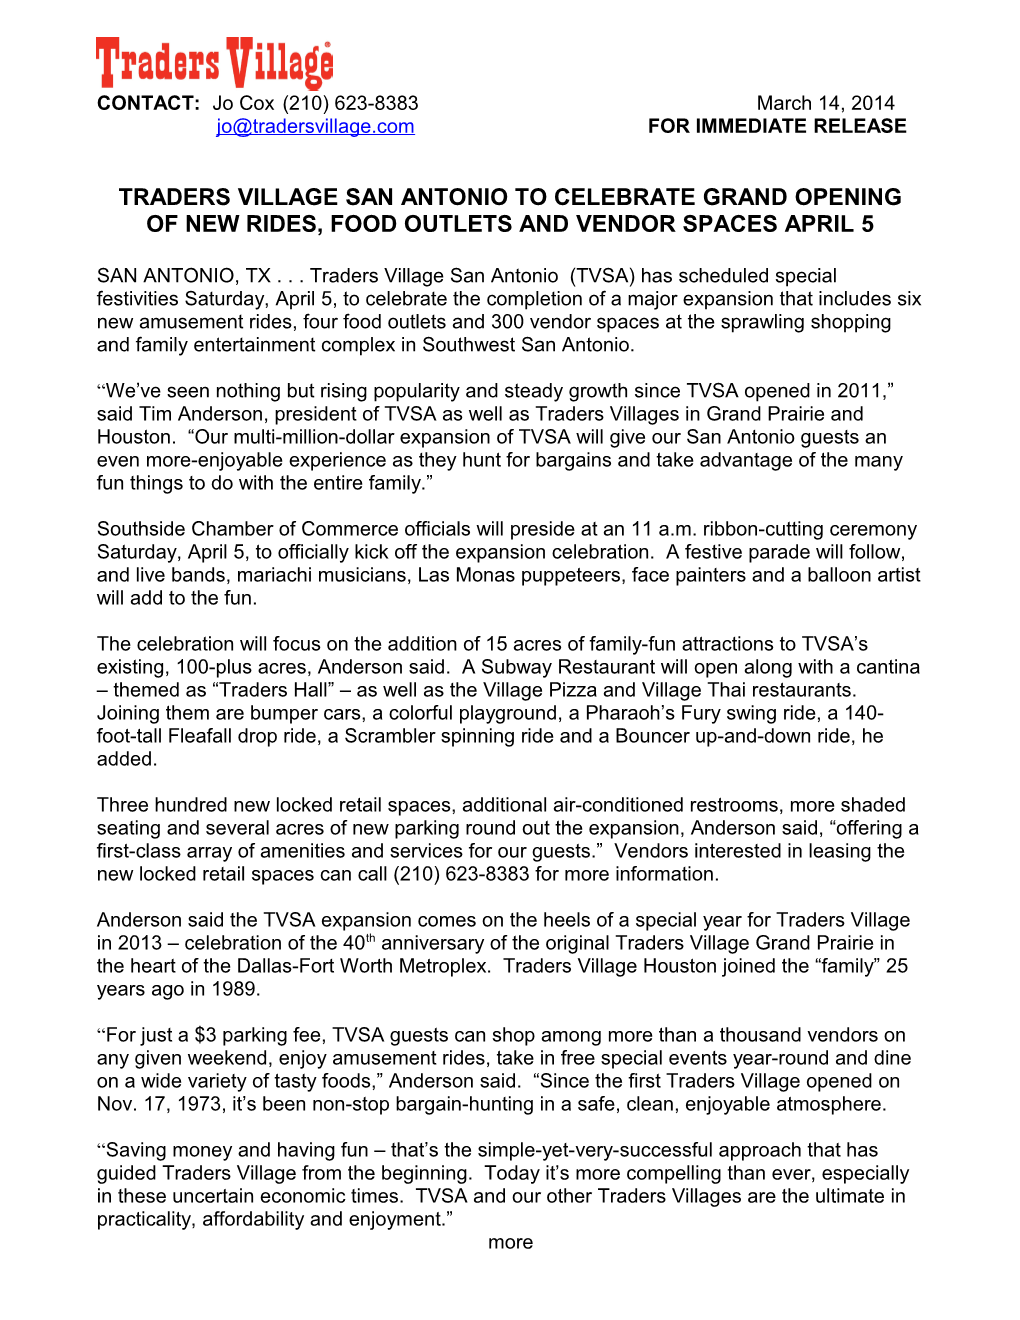 Traders Village San Antonio to Celebrate Grand Opening